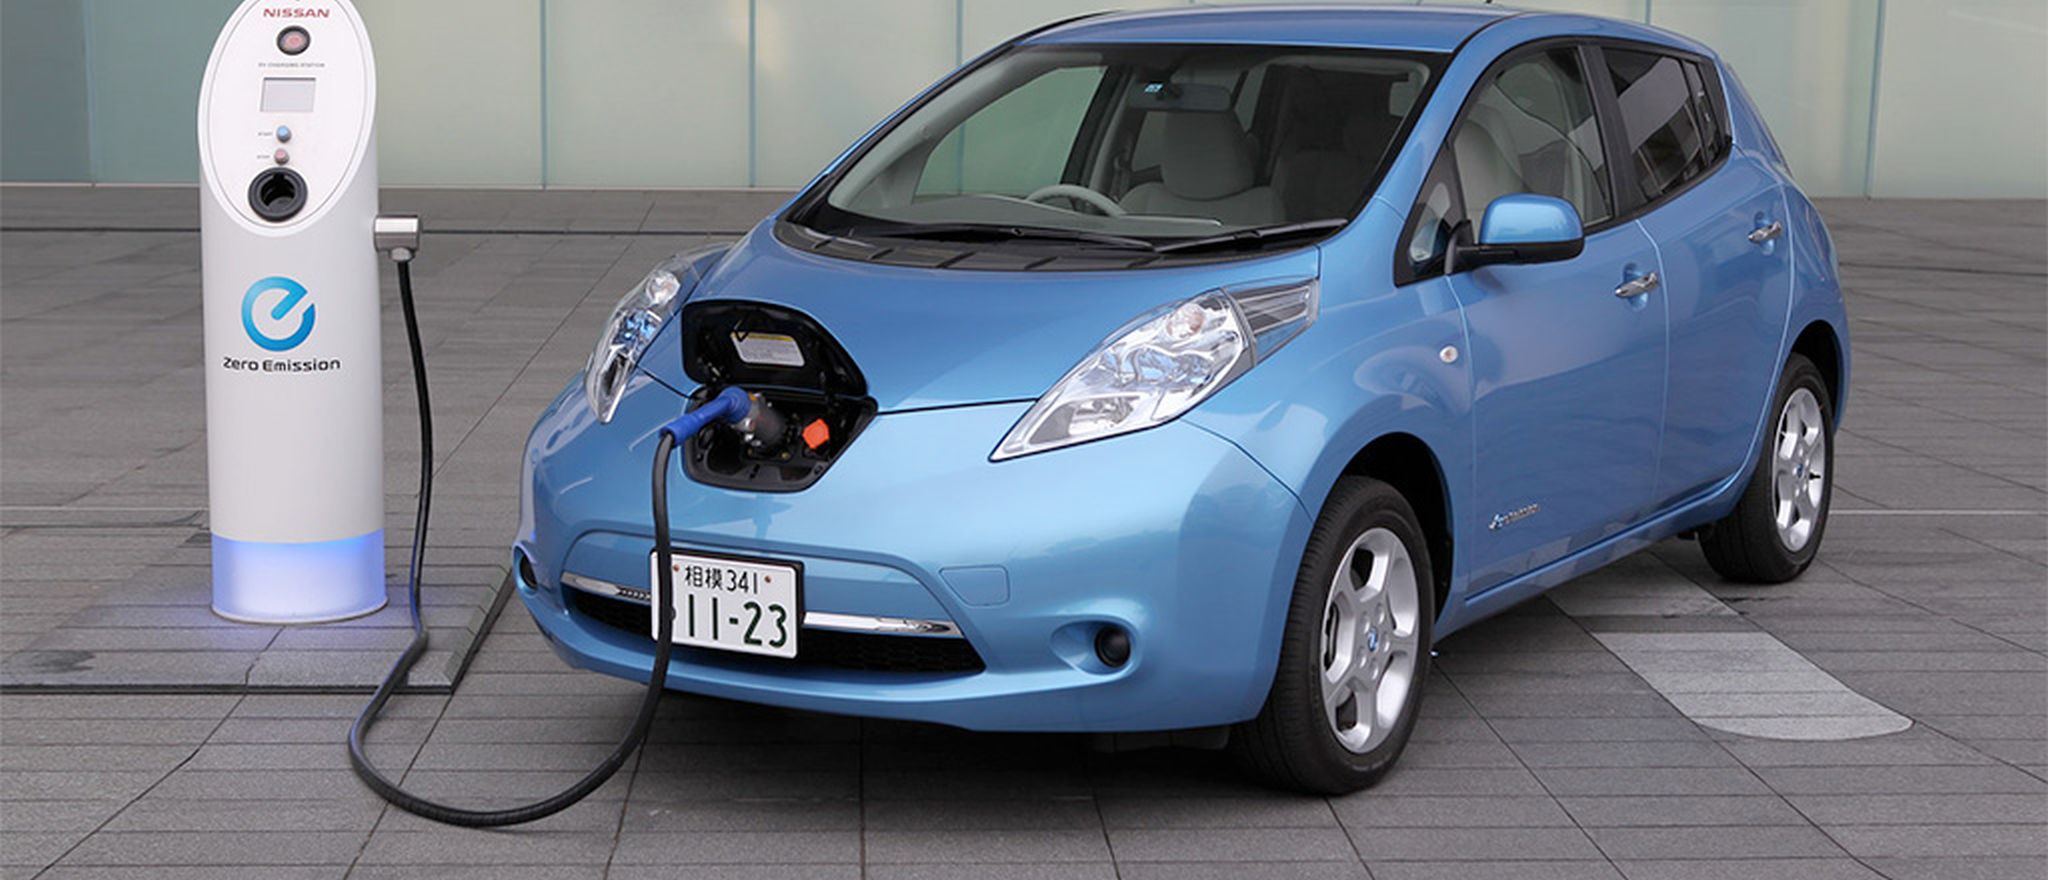 Nissan Leaf charging.jpg